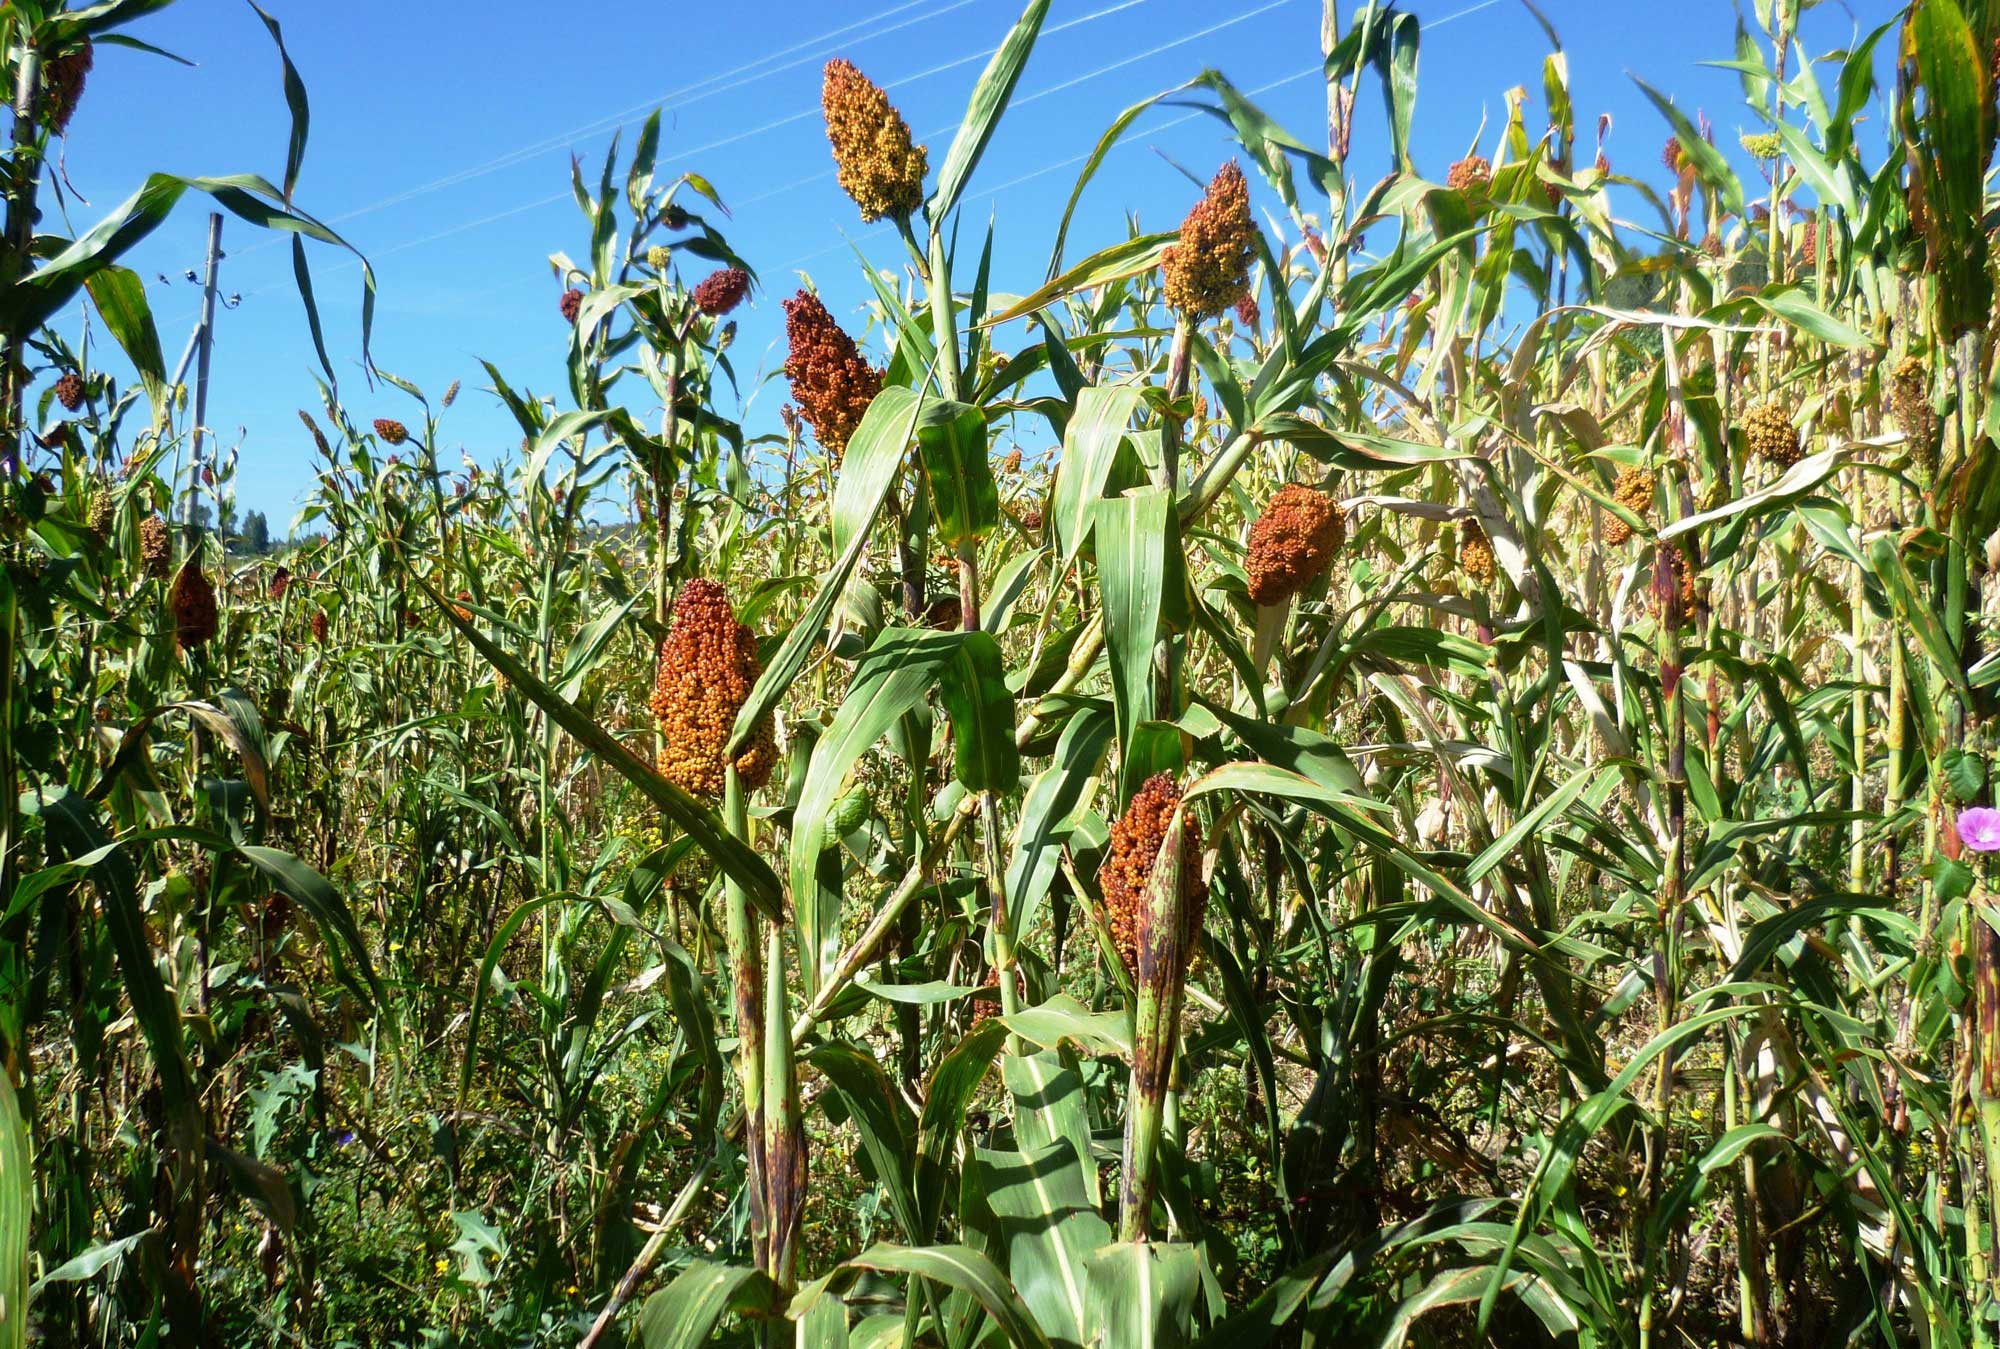 Photo of a field of sorghum in Amara, Ethiopia. The photo shows sorghum plants with ears of reddish-orange grain.